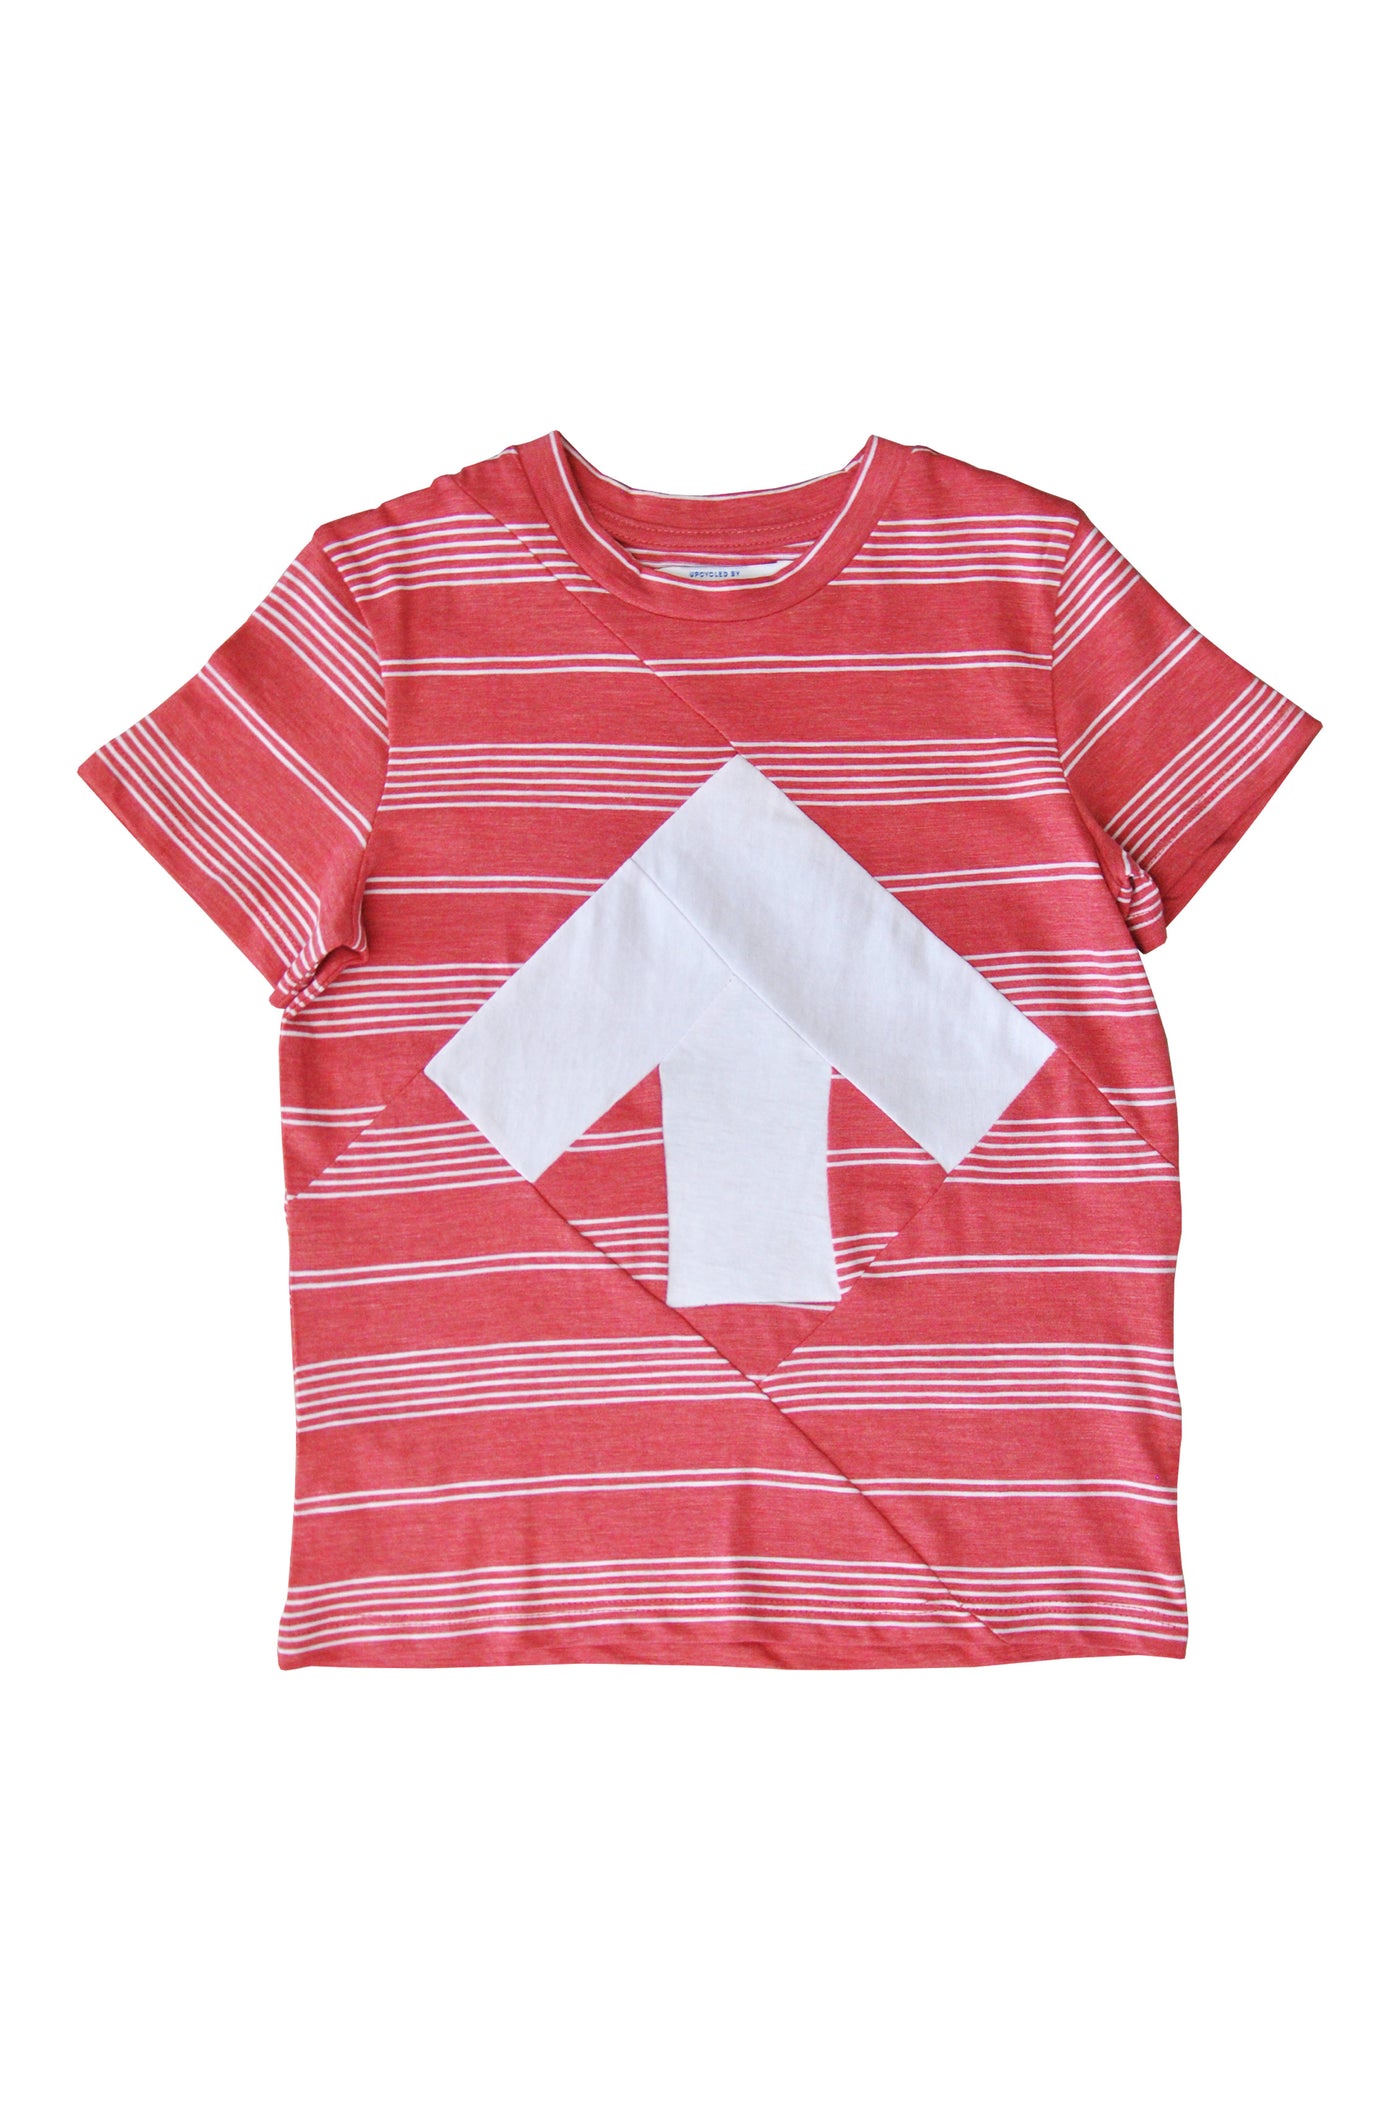 Up-shirt for kids | Red, white - Reet Aus